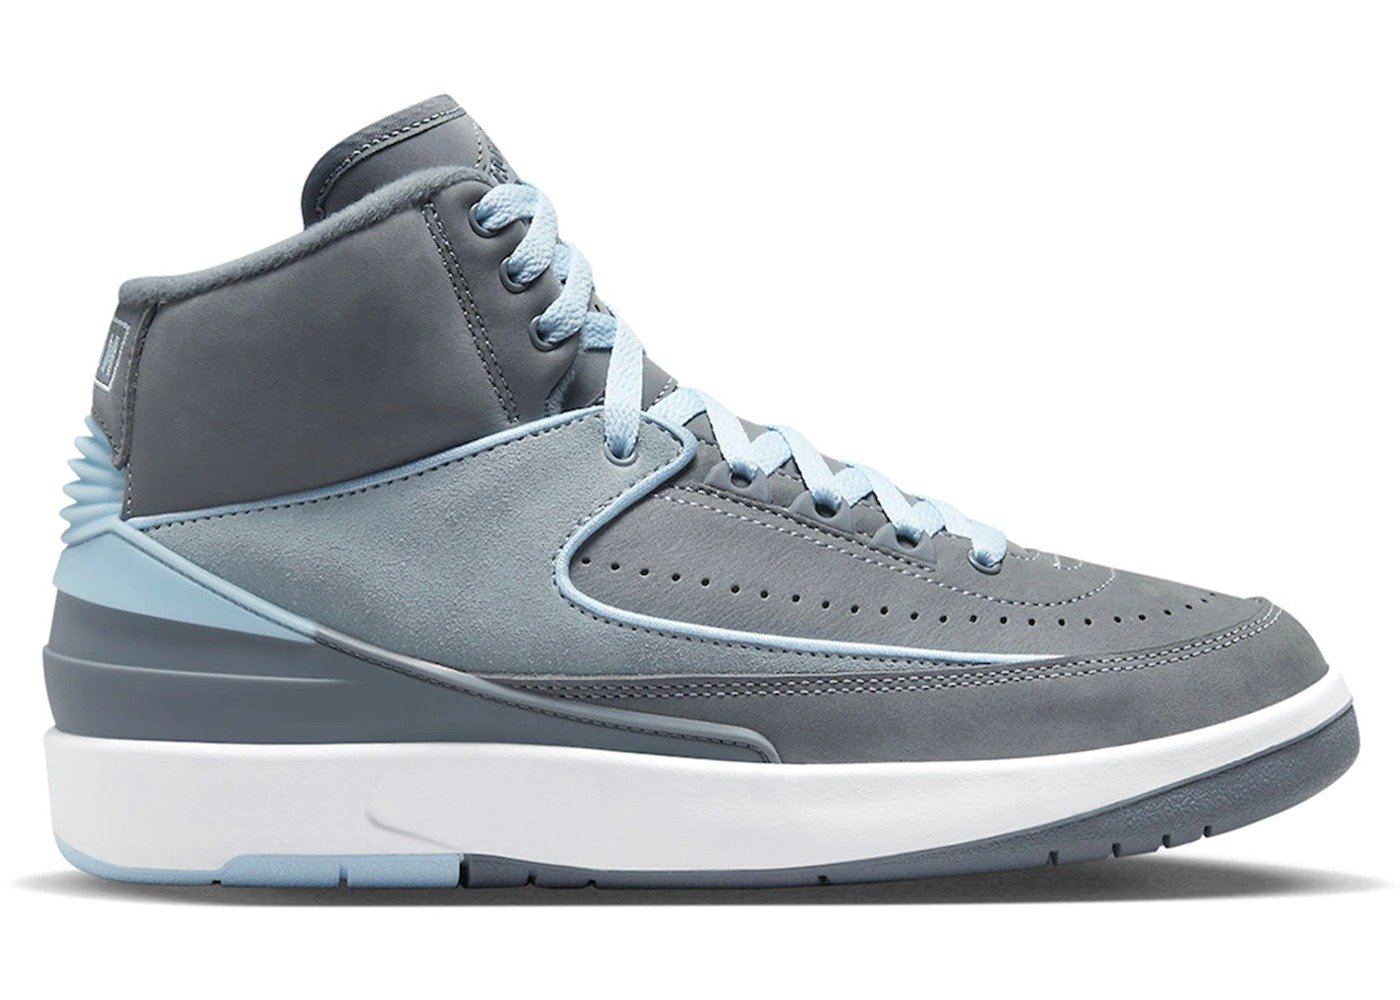 Now Available: Air Jordan 2 Retro (W) "Cool Grey" — Sneaker Shouts